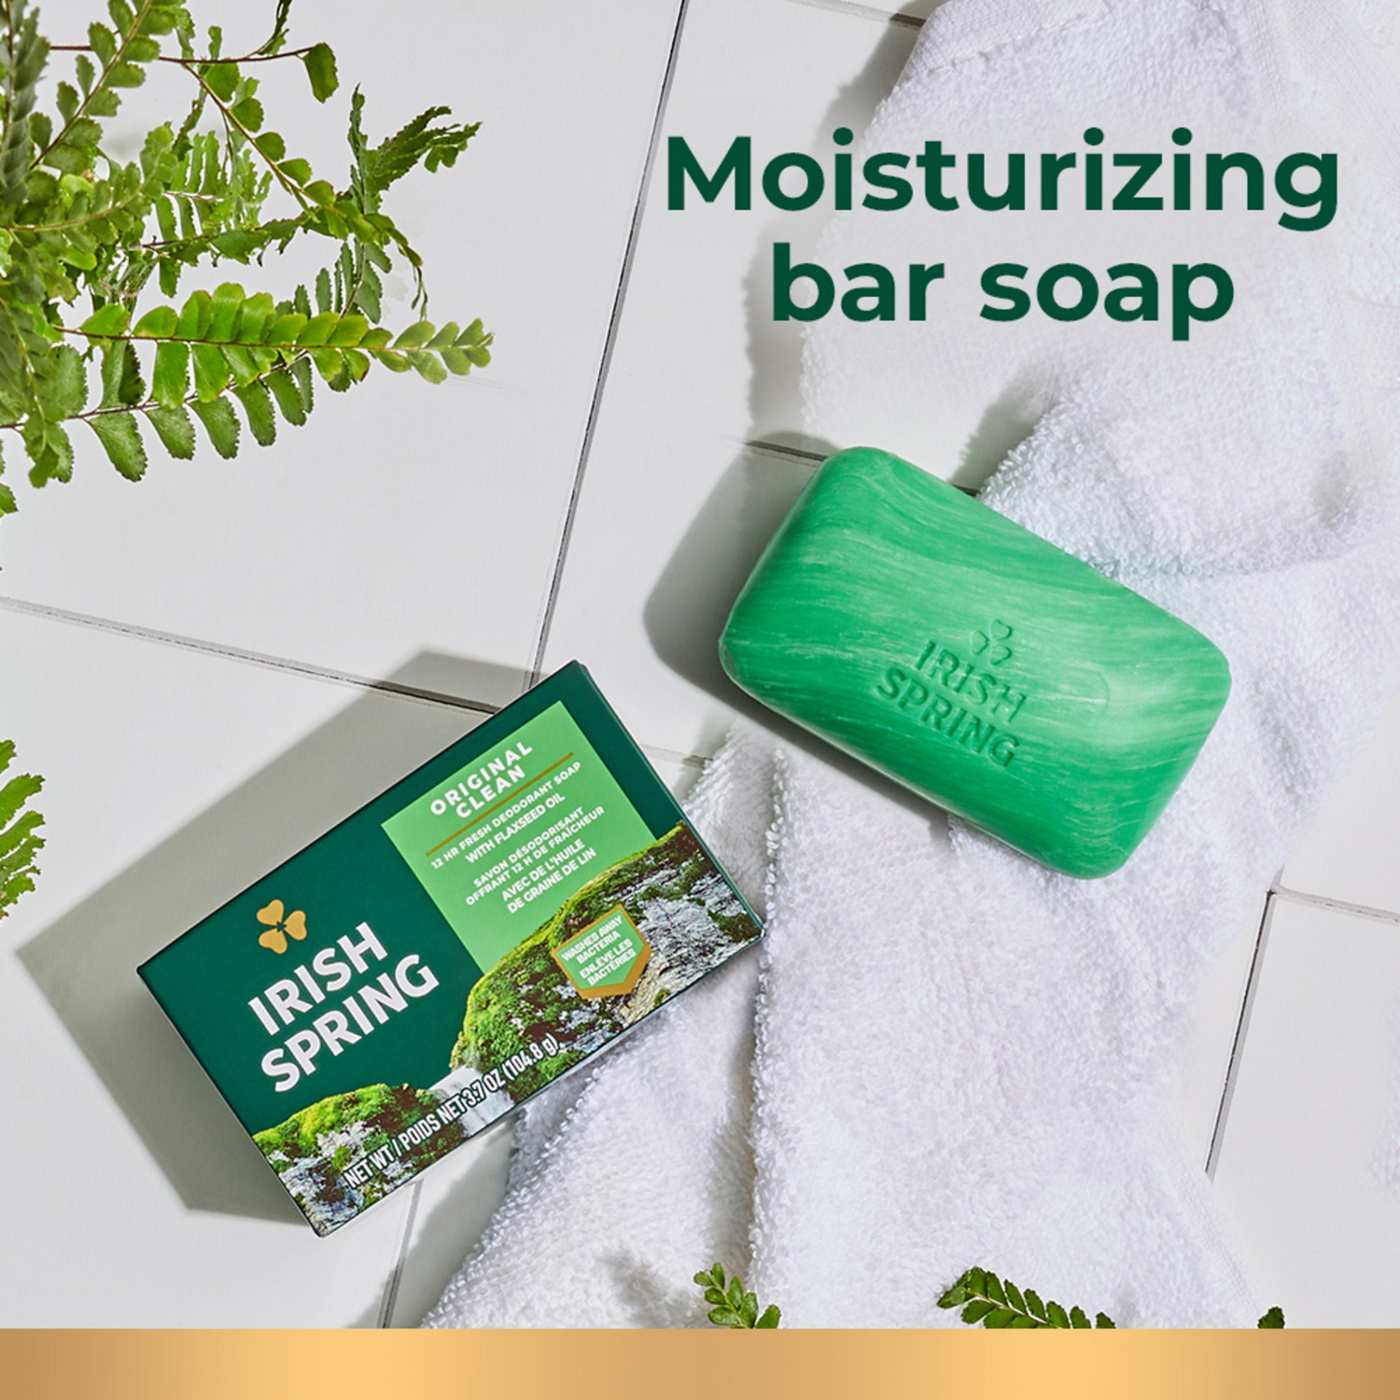 Irish Spring Original Clean Deodorant Bar Soap for Men; image 7 of 9